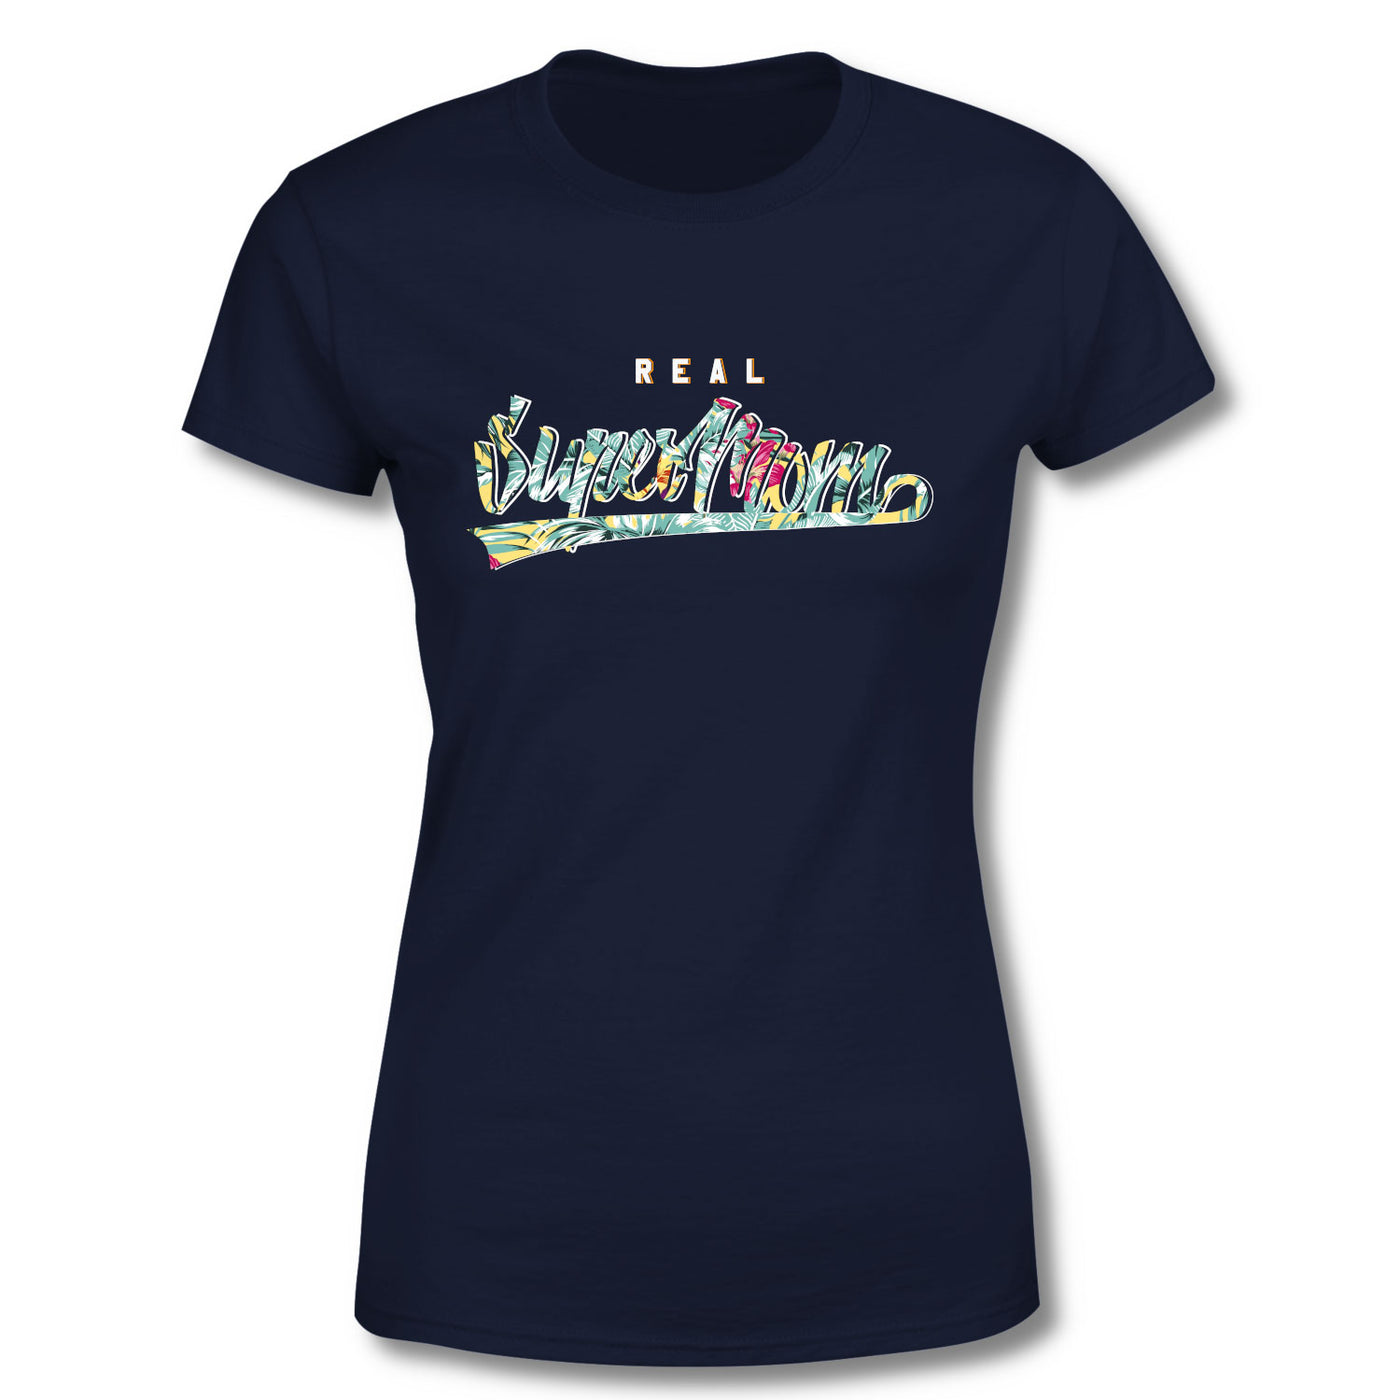 real-super-mom-shirt-nvy-dd129wts